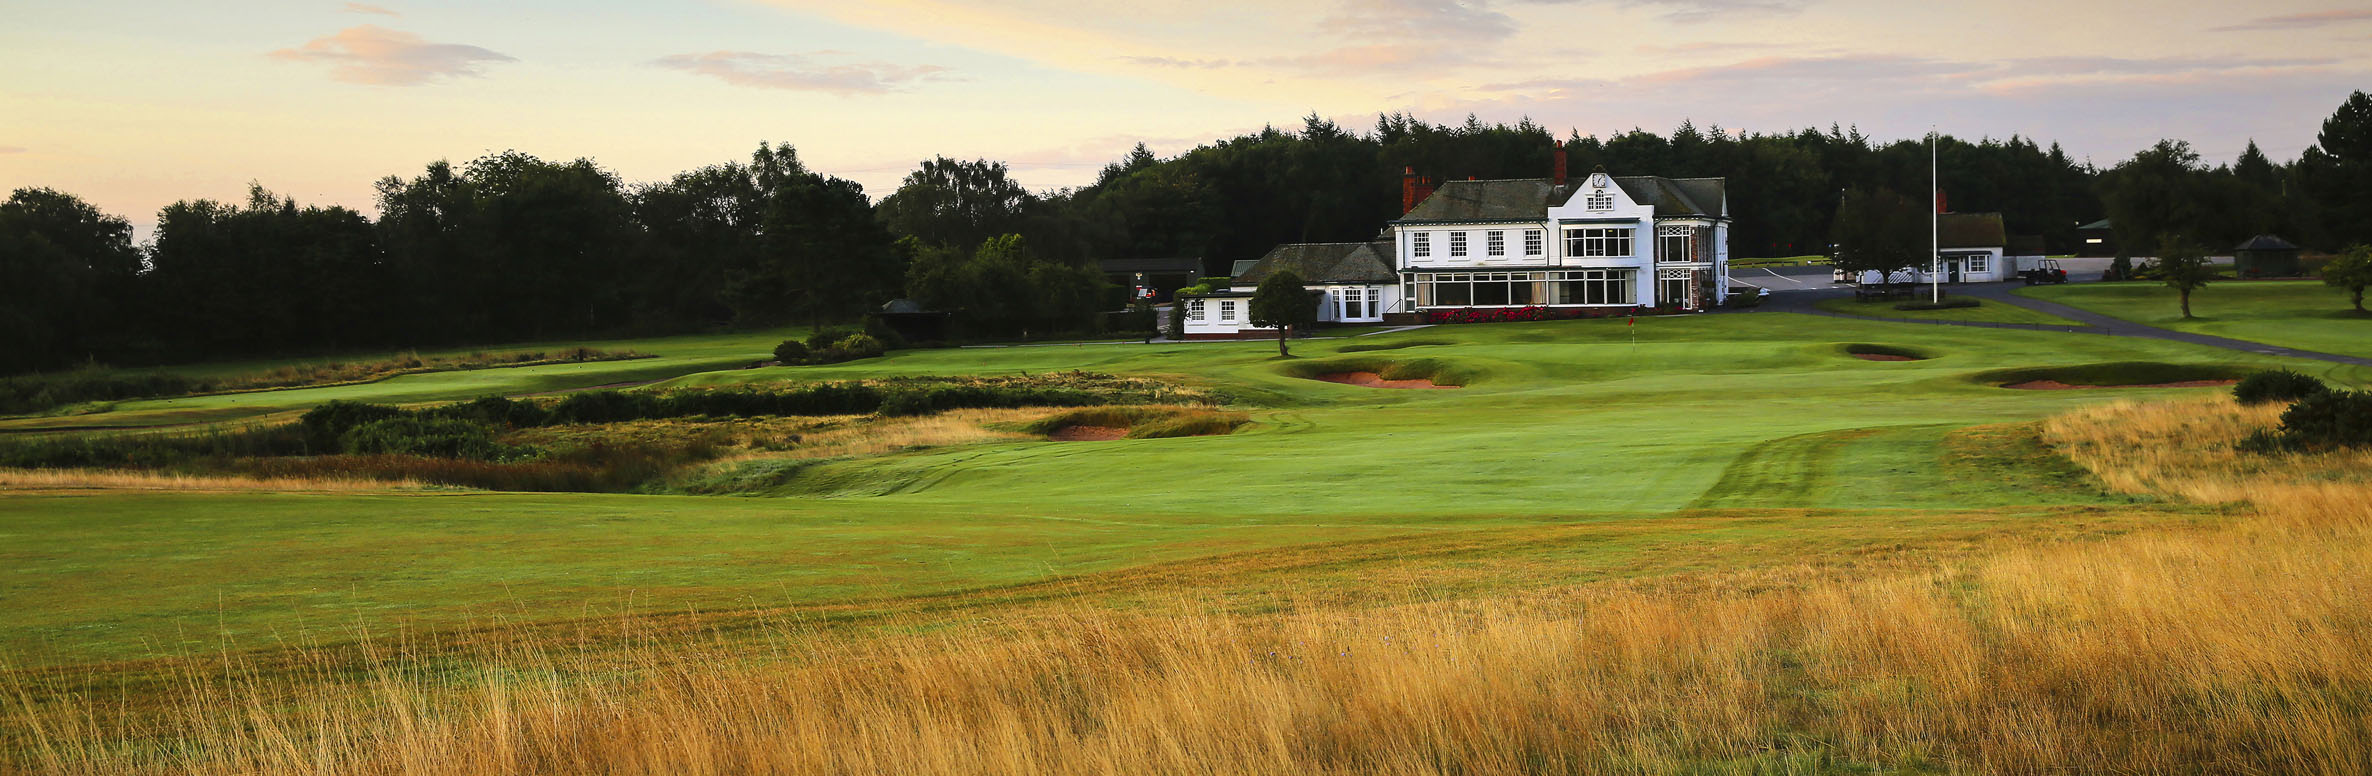 Golf Course Image - Notts Golf Club No. 18